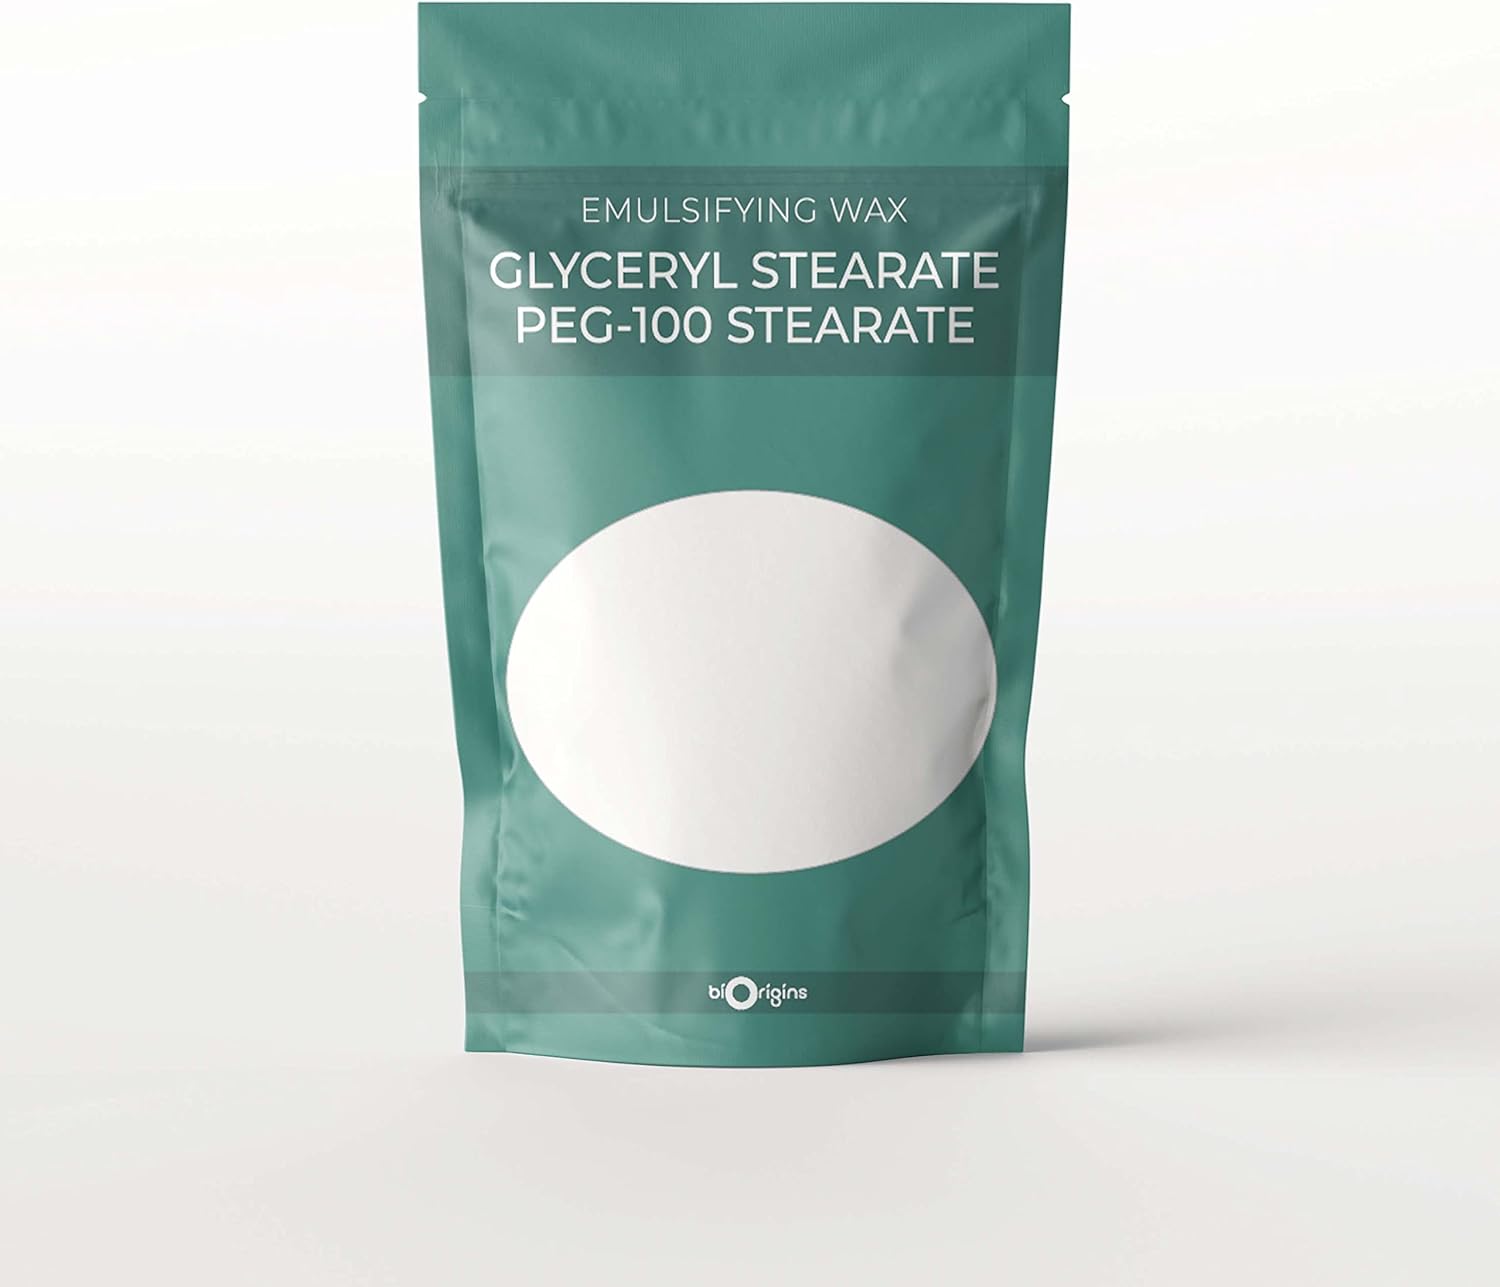 Mystic Moments Glyceryl Stearate & PEG-100 Stearate Emulsifying Wax 1Kg | 100% Natural Vegan GMO Free